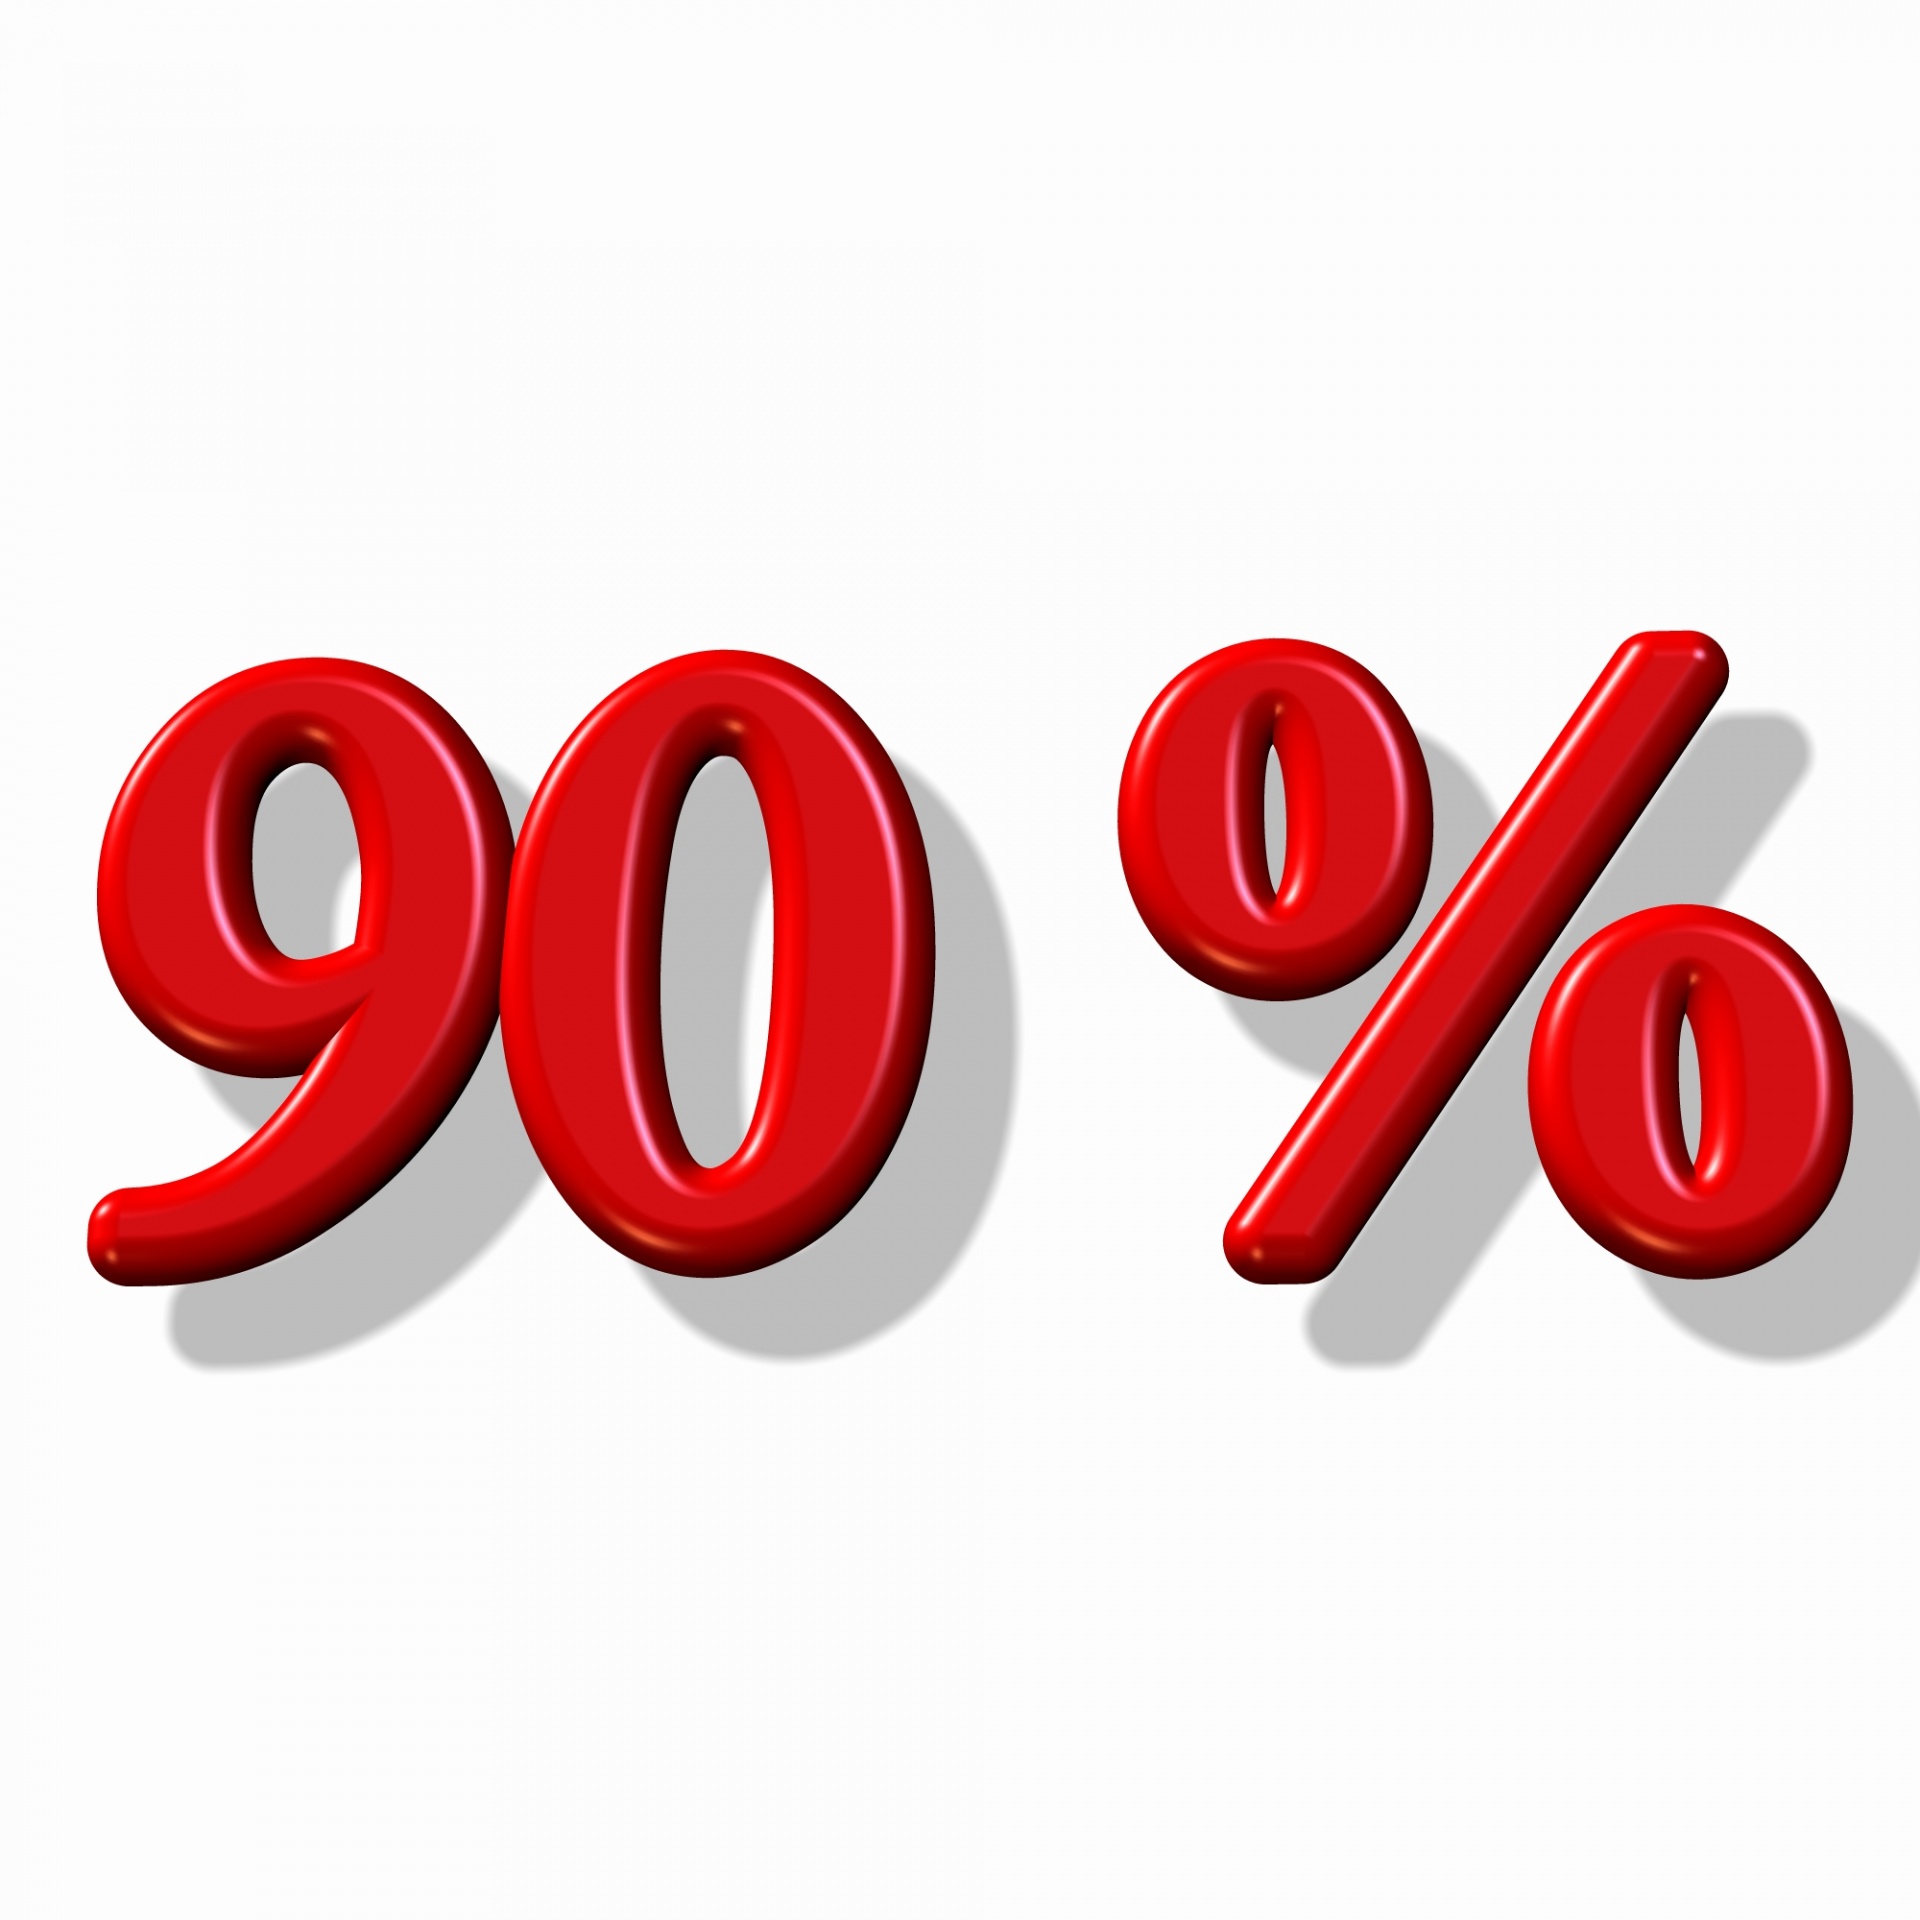 percent discount remission statistics free photo